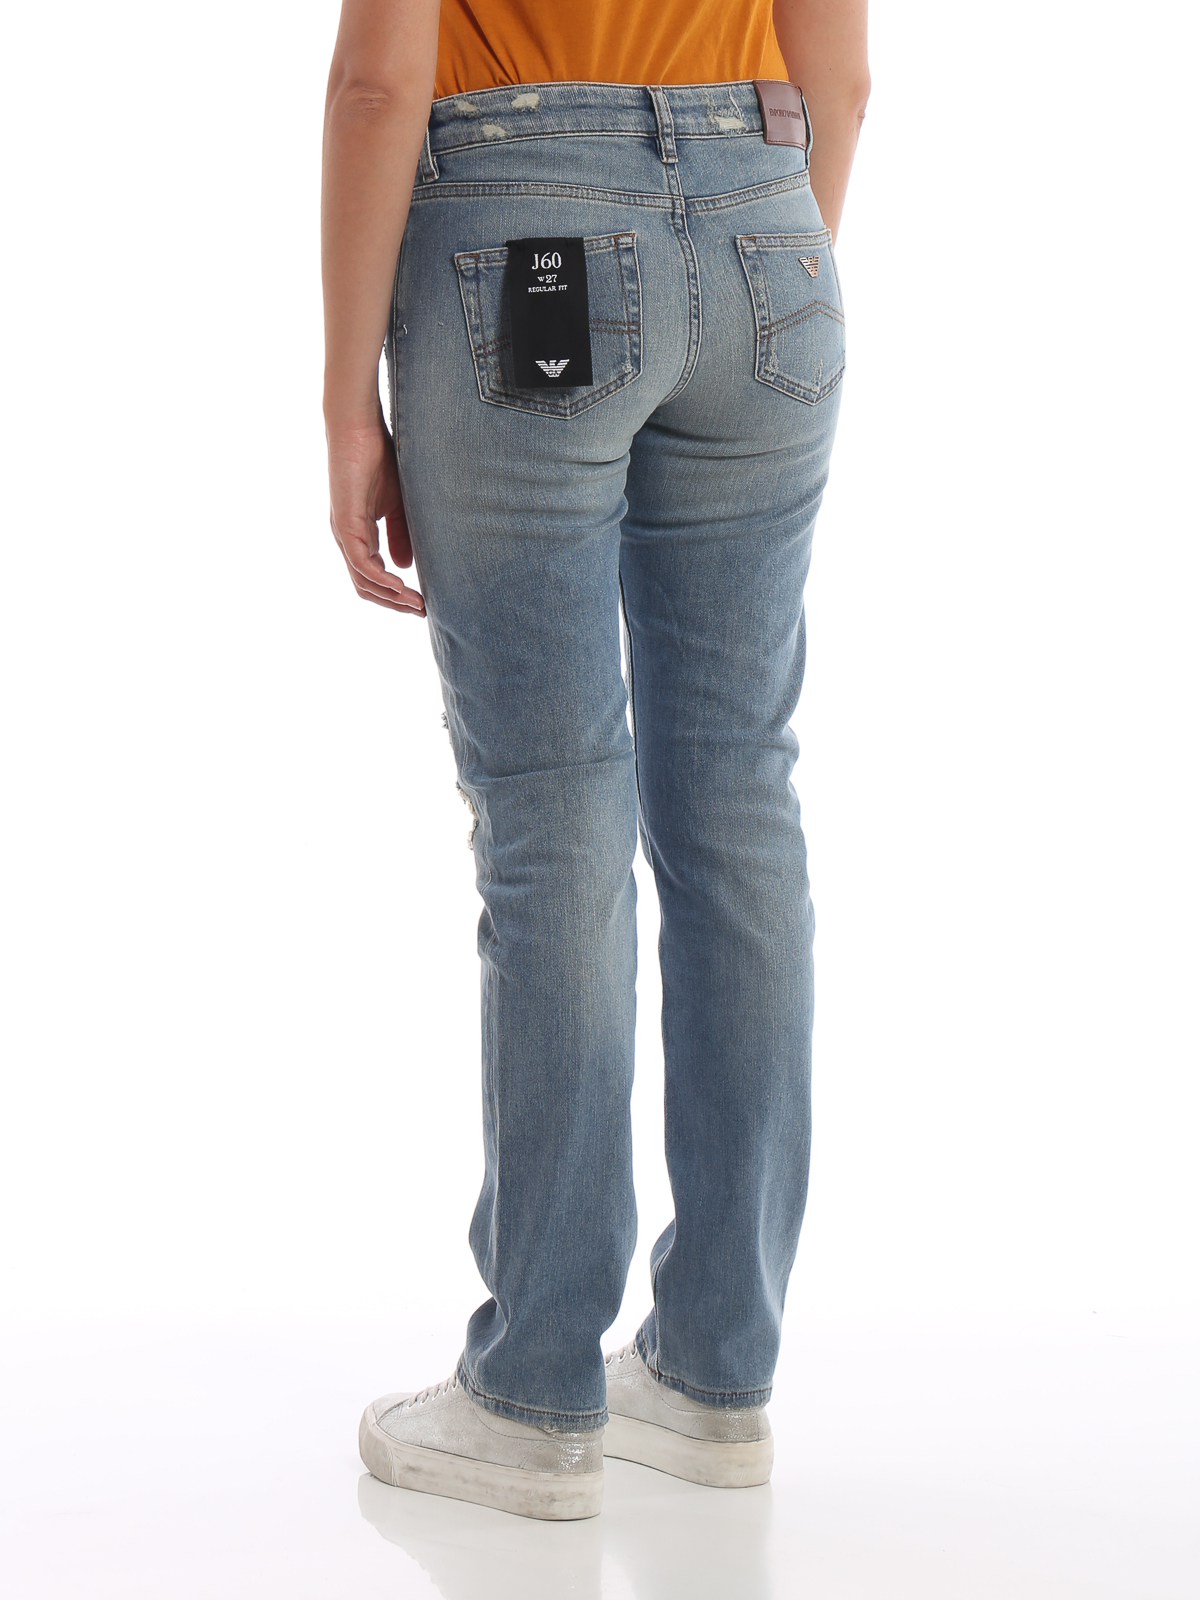 Excursie maat excuus Straight leg jeans Emporio Armani - J60 embroidered patch jeans -  6G2J602D2SZ941